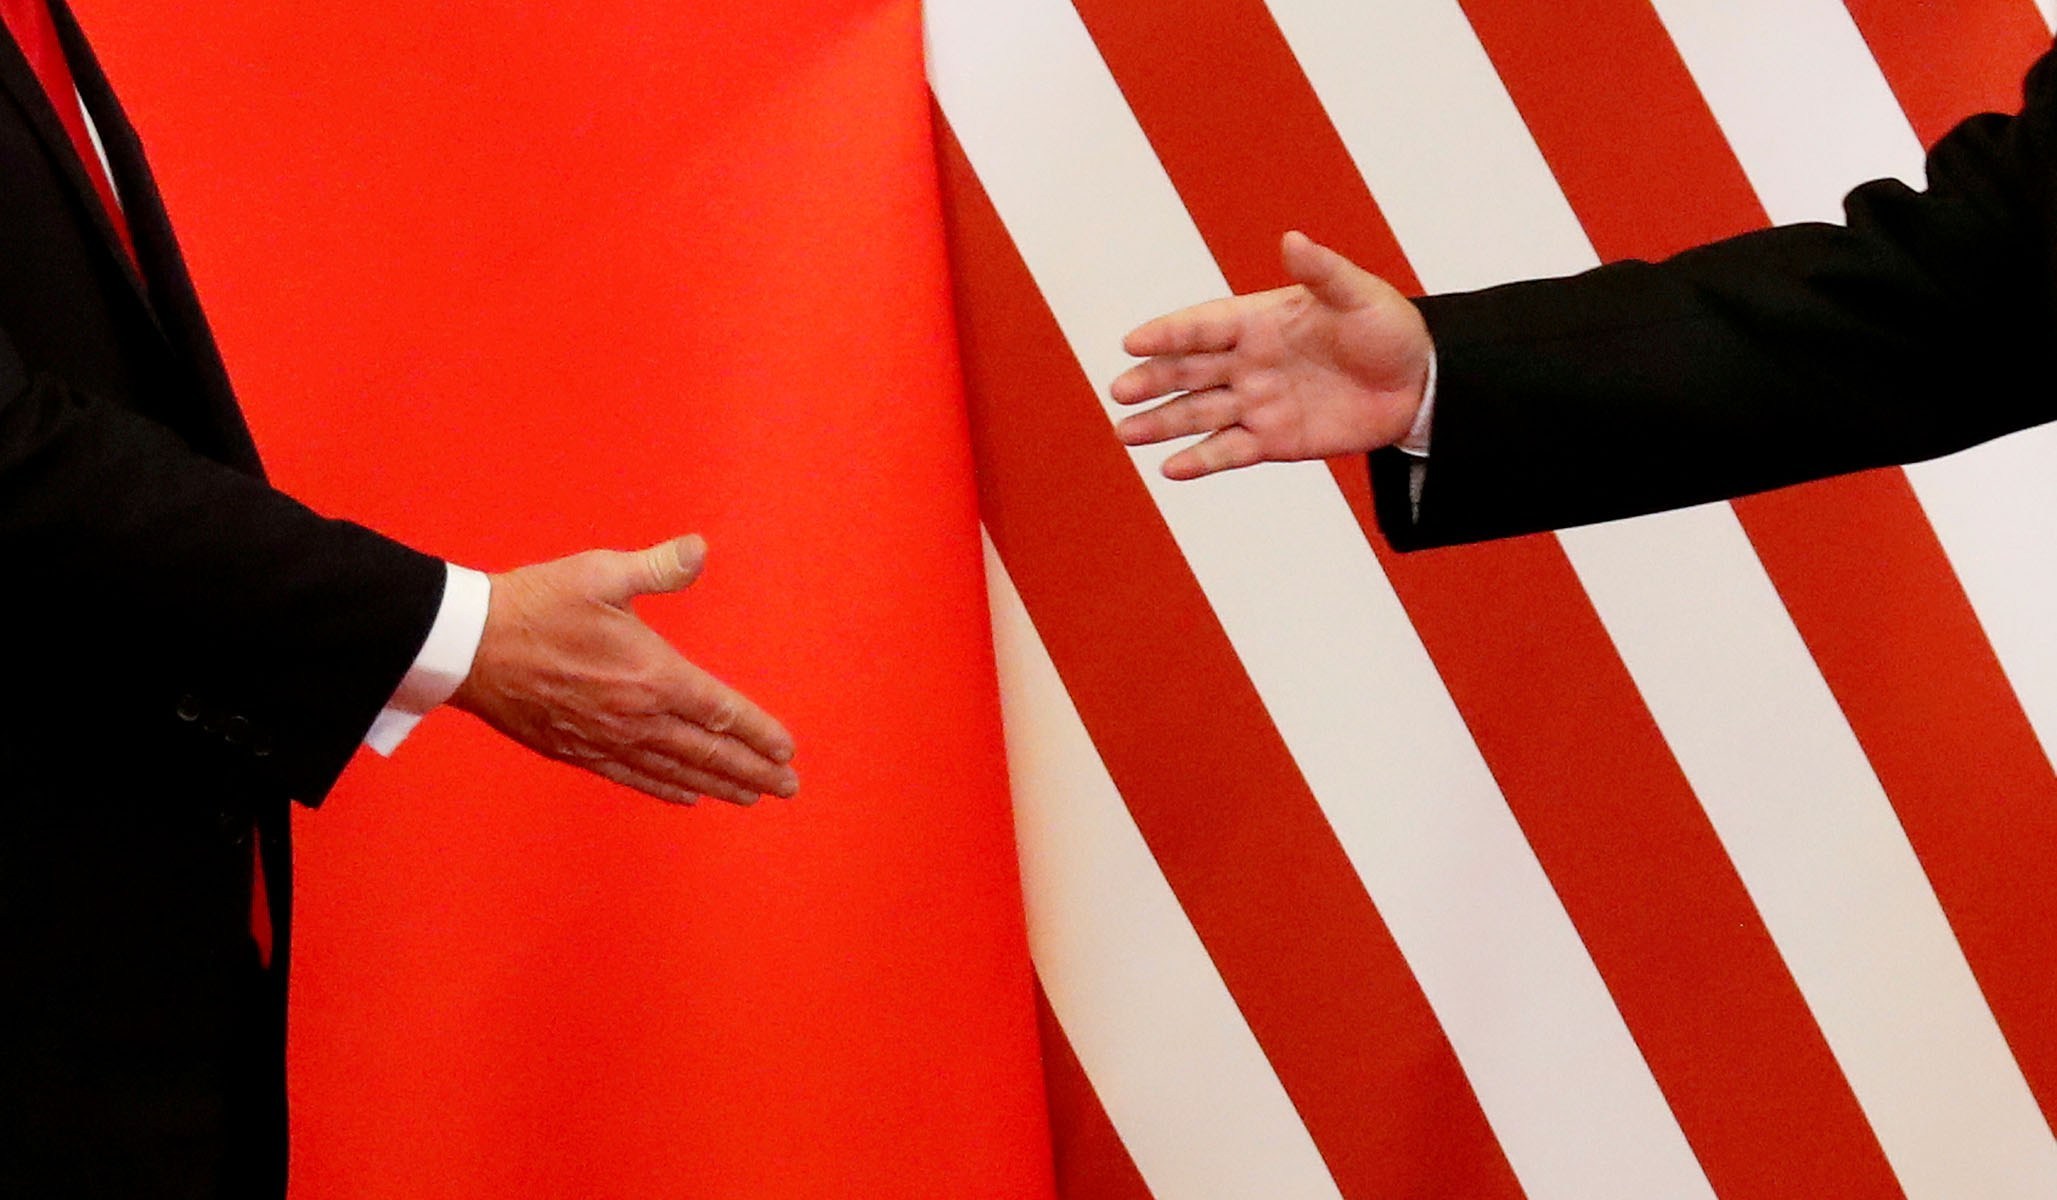 Donald Trump & China's President Xi Jinping shake hands